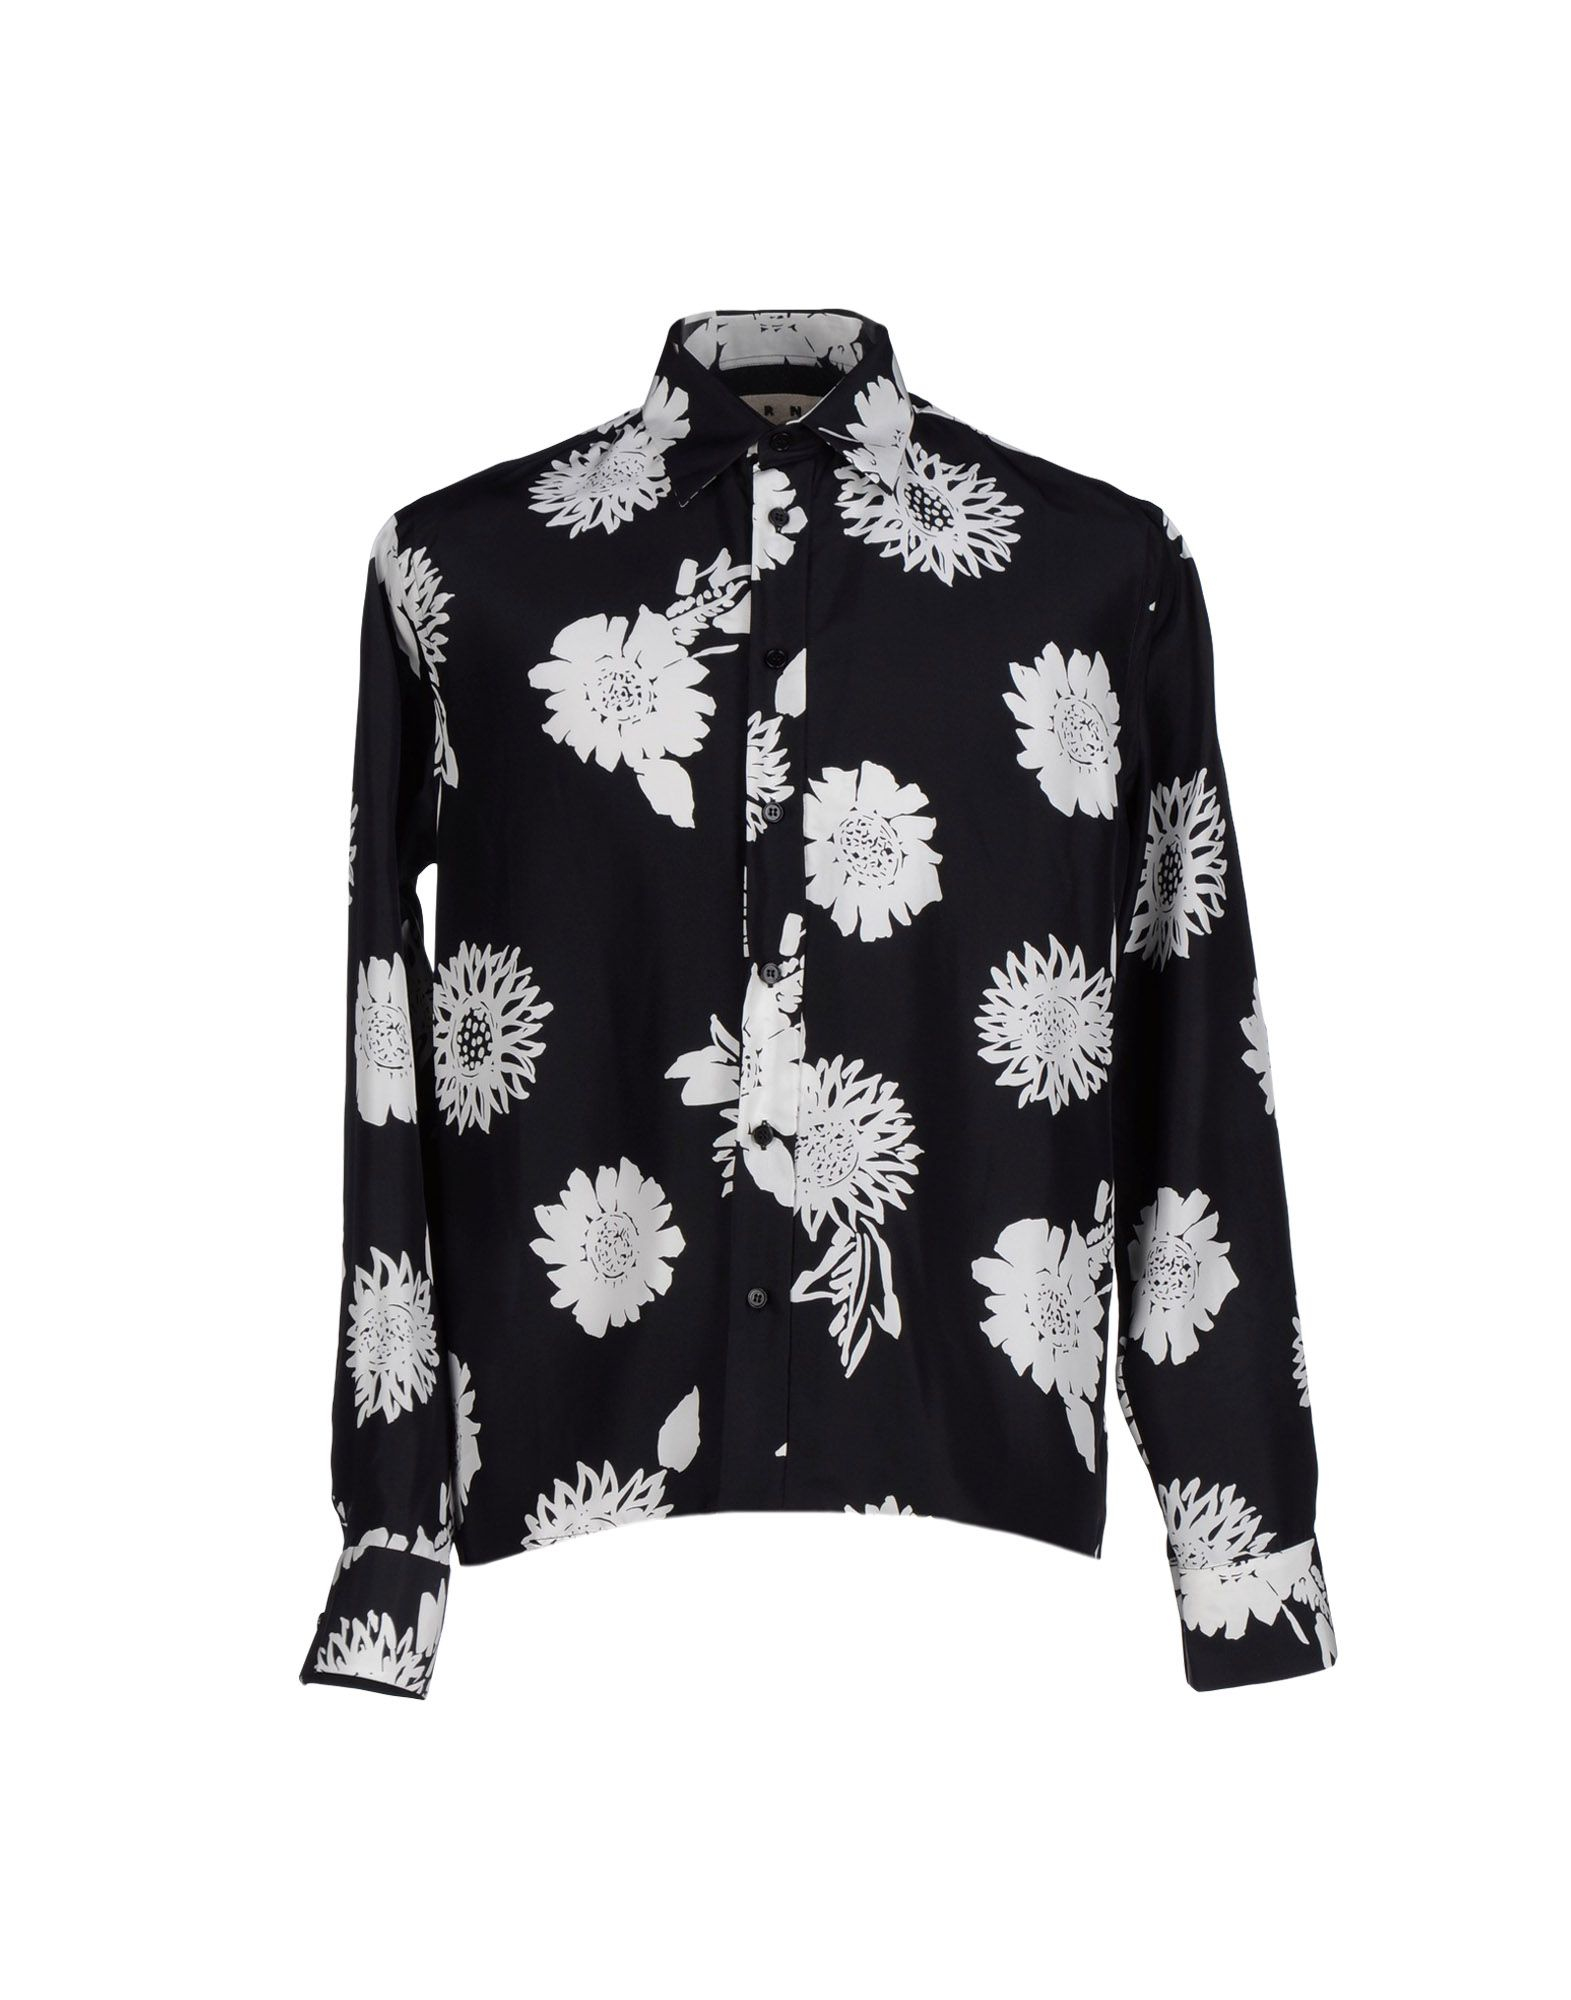 Marni Colour Block Floral Print Shirt in Black for Men - Lyst